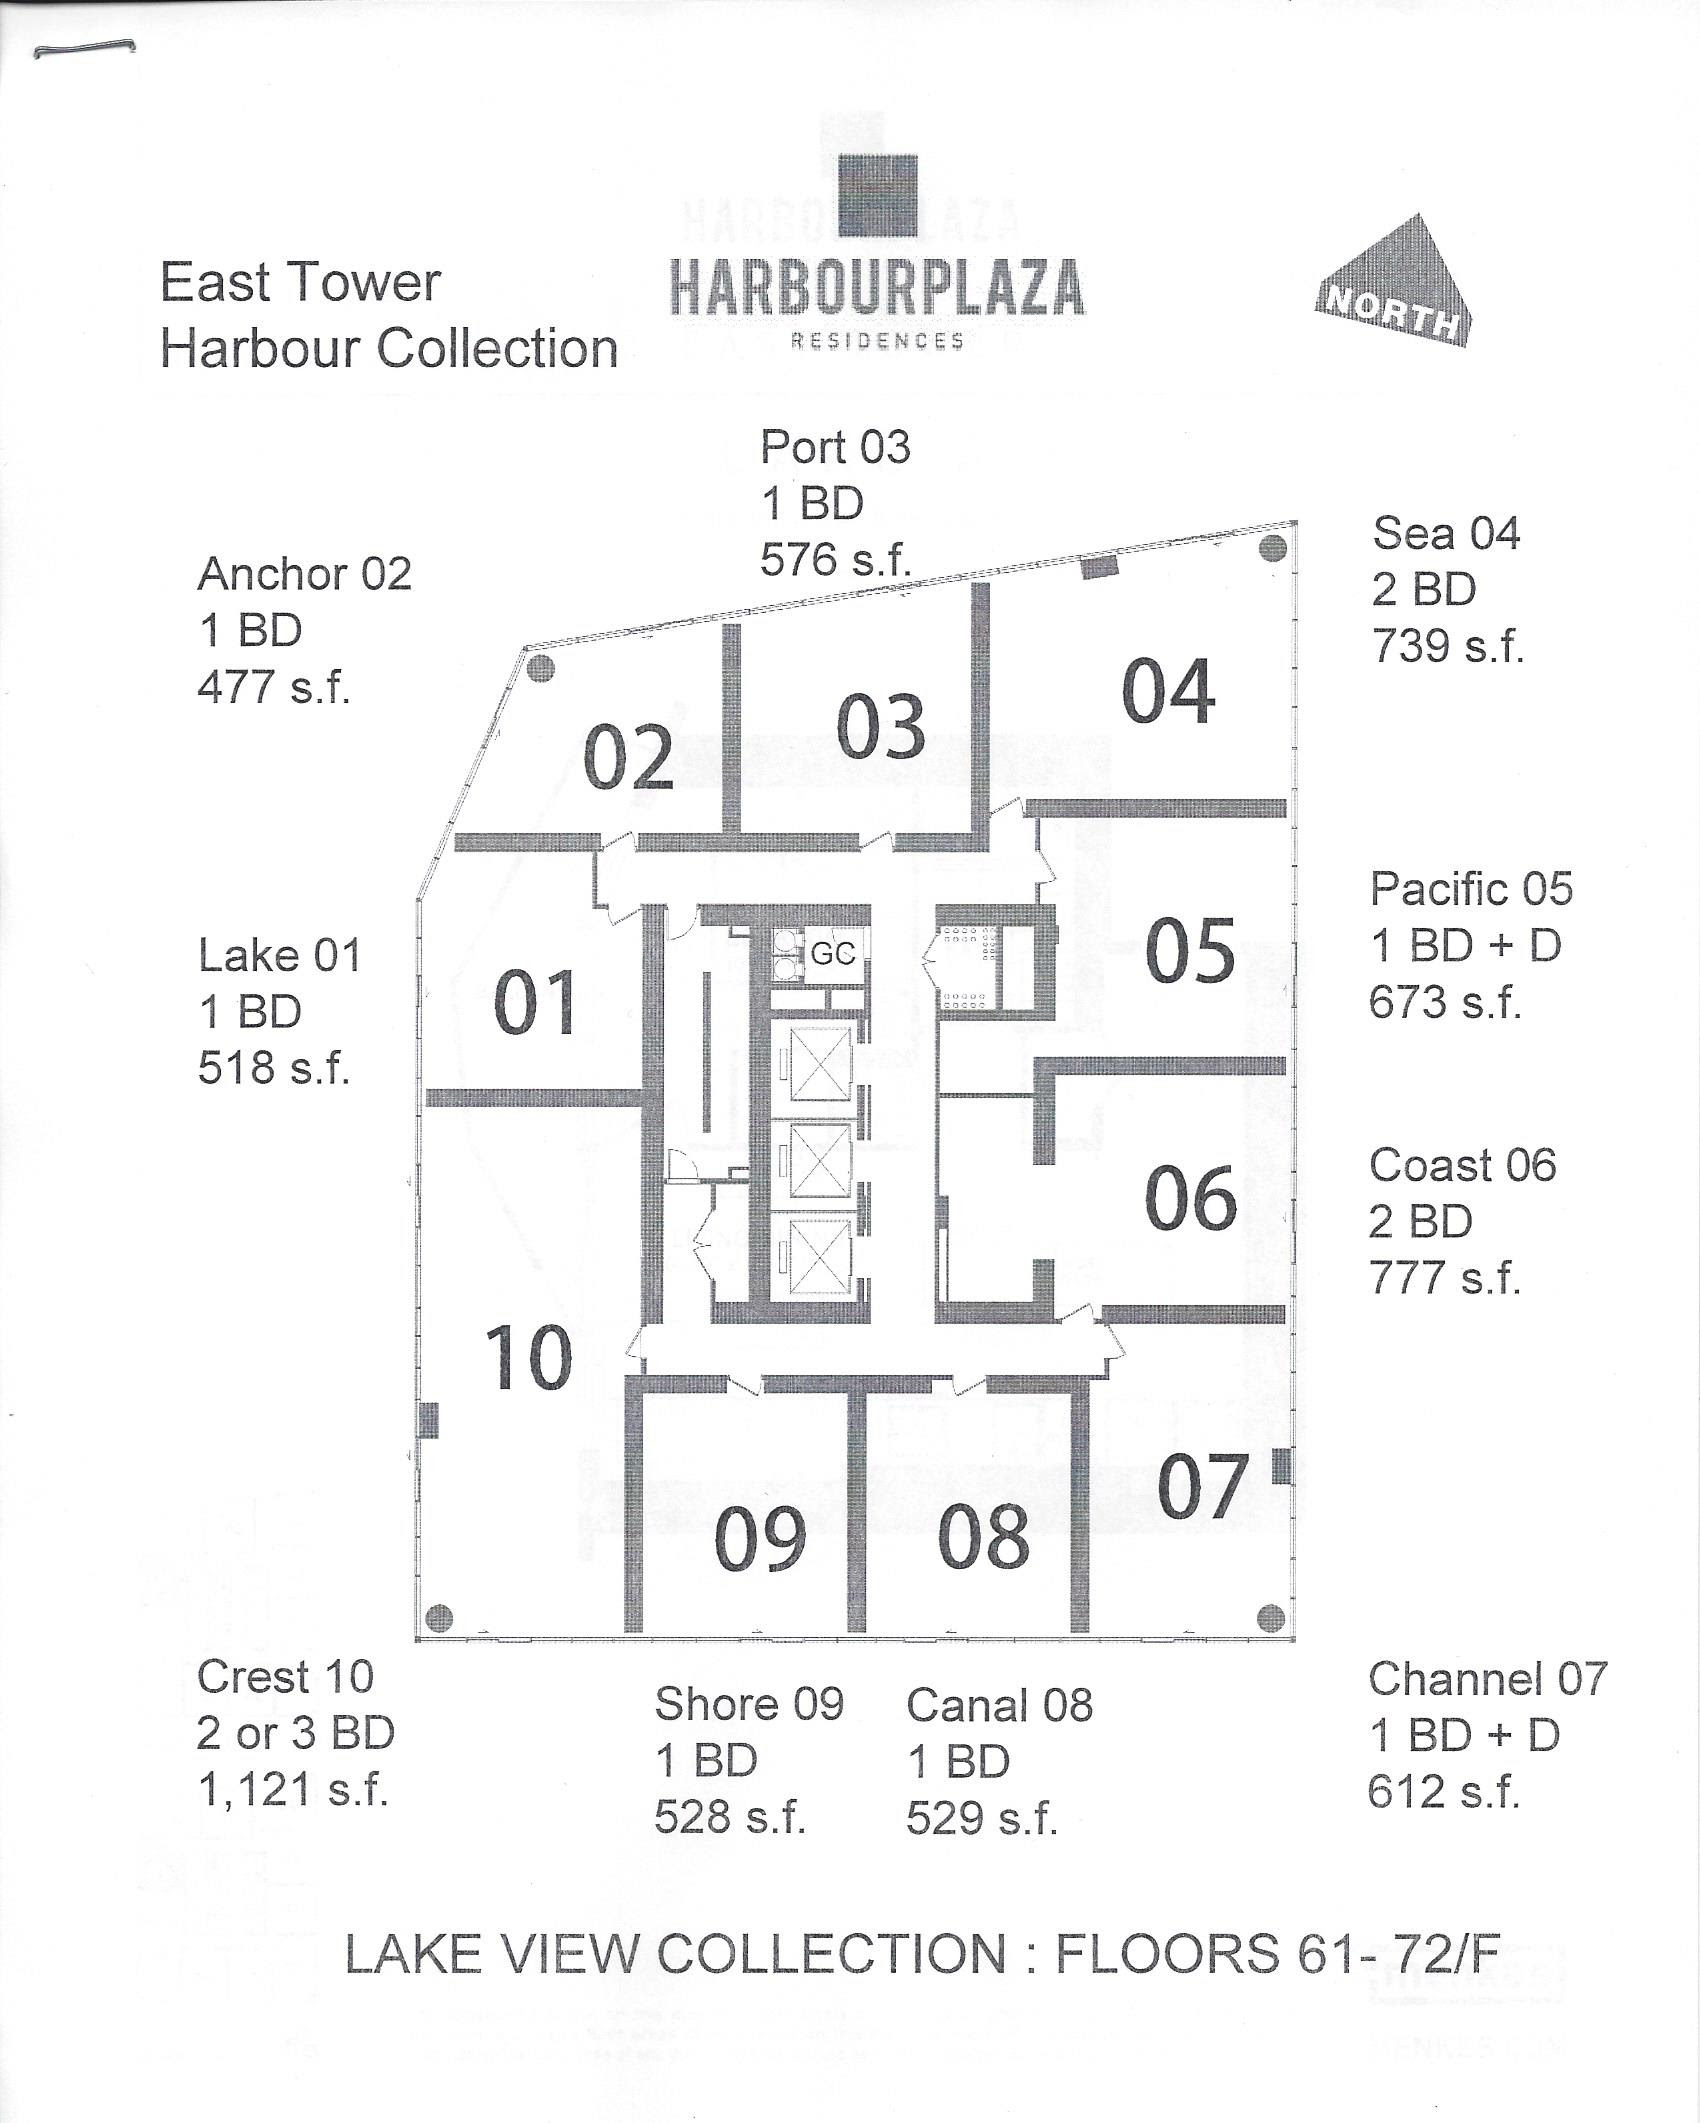 14 Luxury Harbour Plaza East Tower Floor Plans